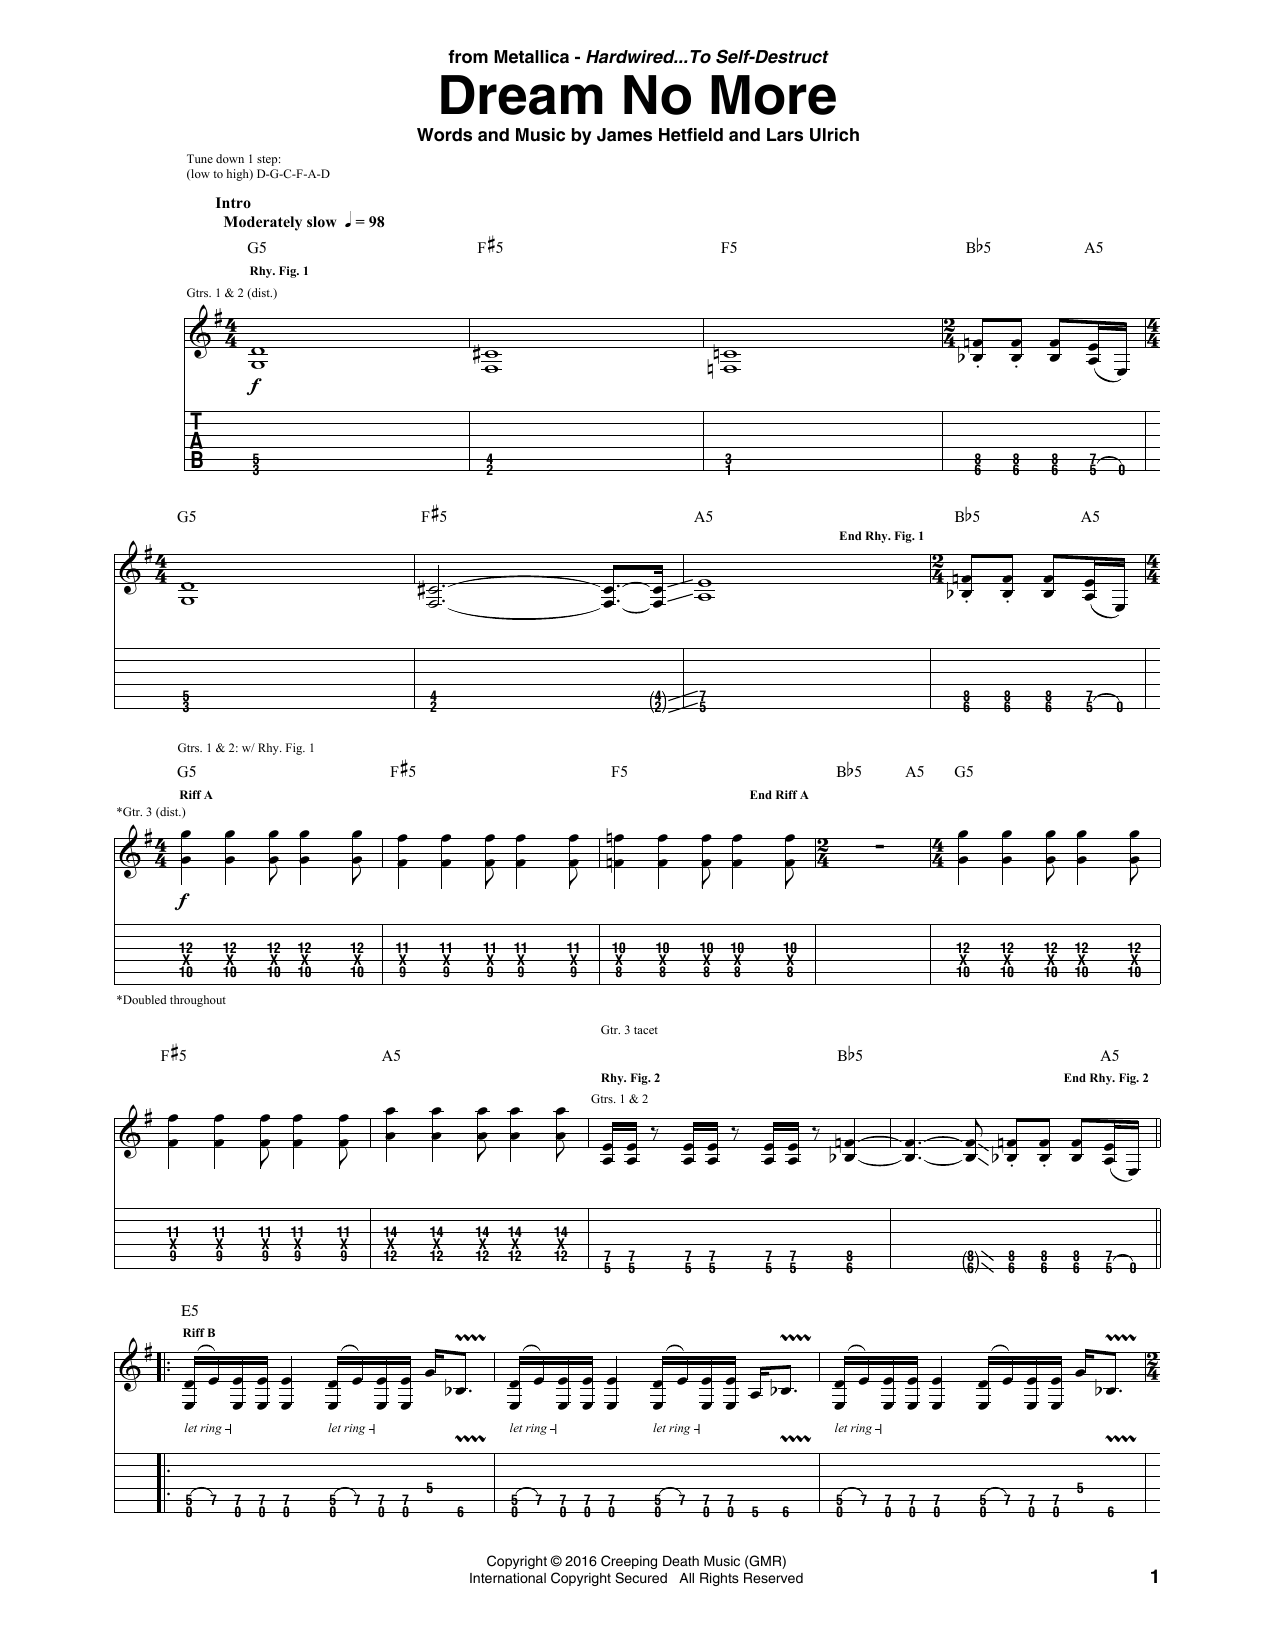 Metallica Dream No More Sheet Music Notes & Chords for Guitar Tab - Download or Print PDF